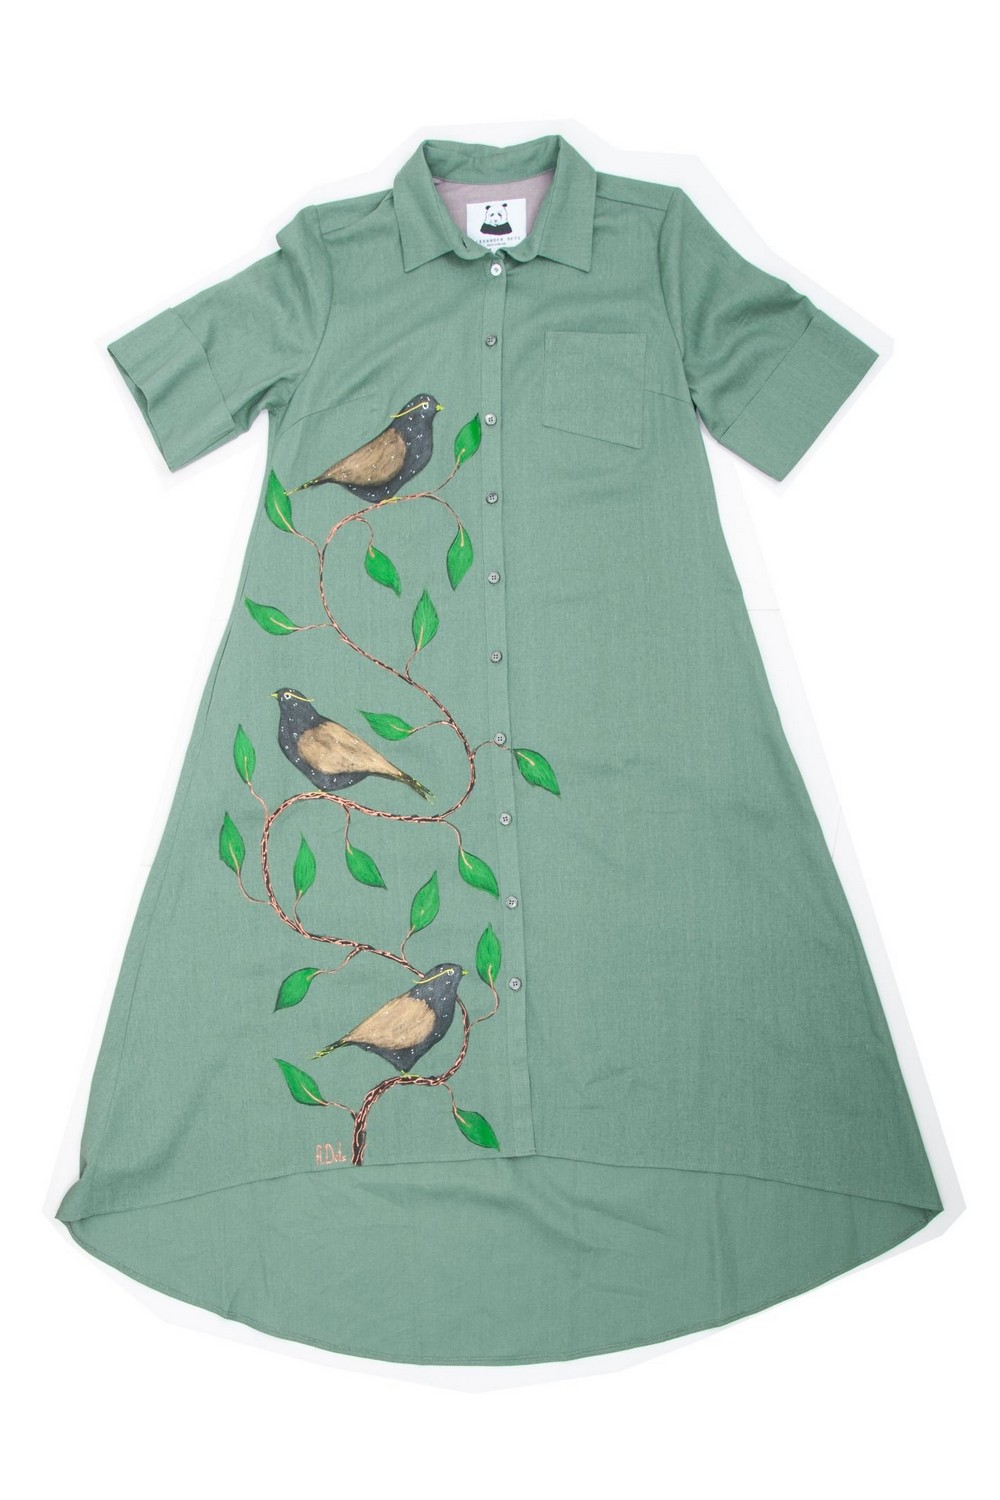 Buy Midi Casual Women Green Cotton Print shirt dress, Unique stylish Short sleeve dress